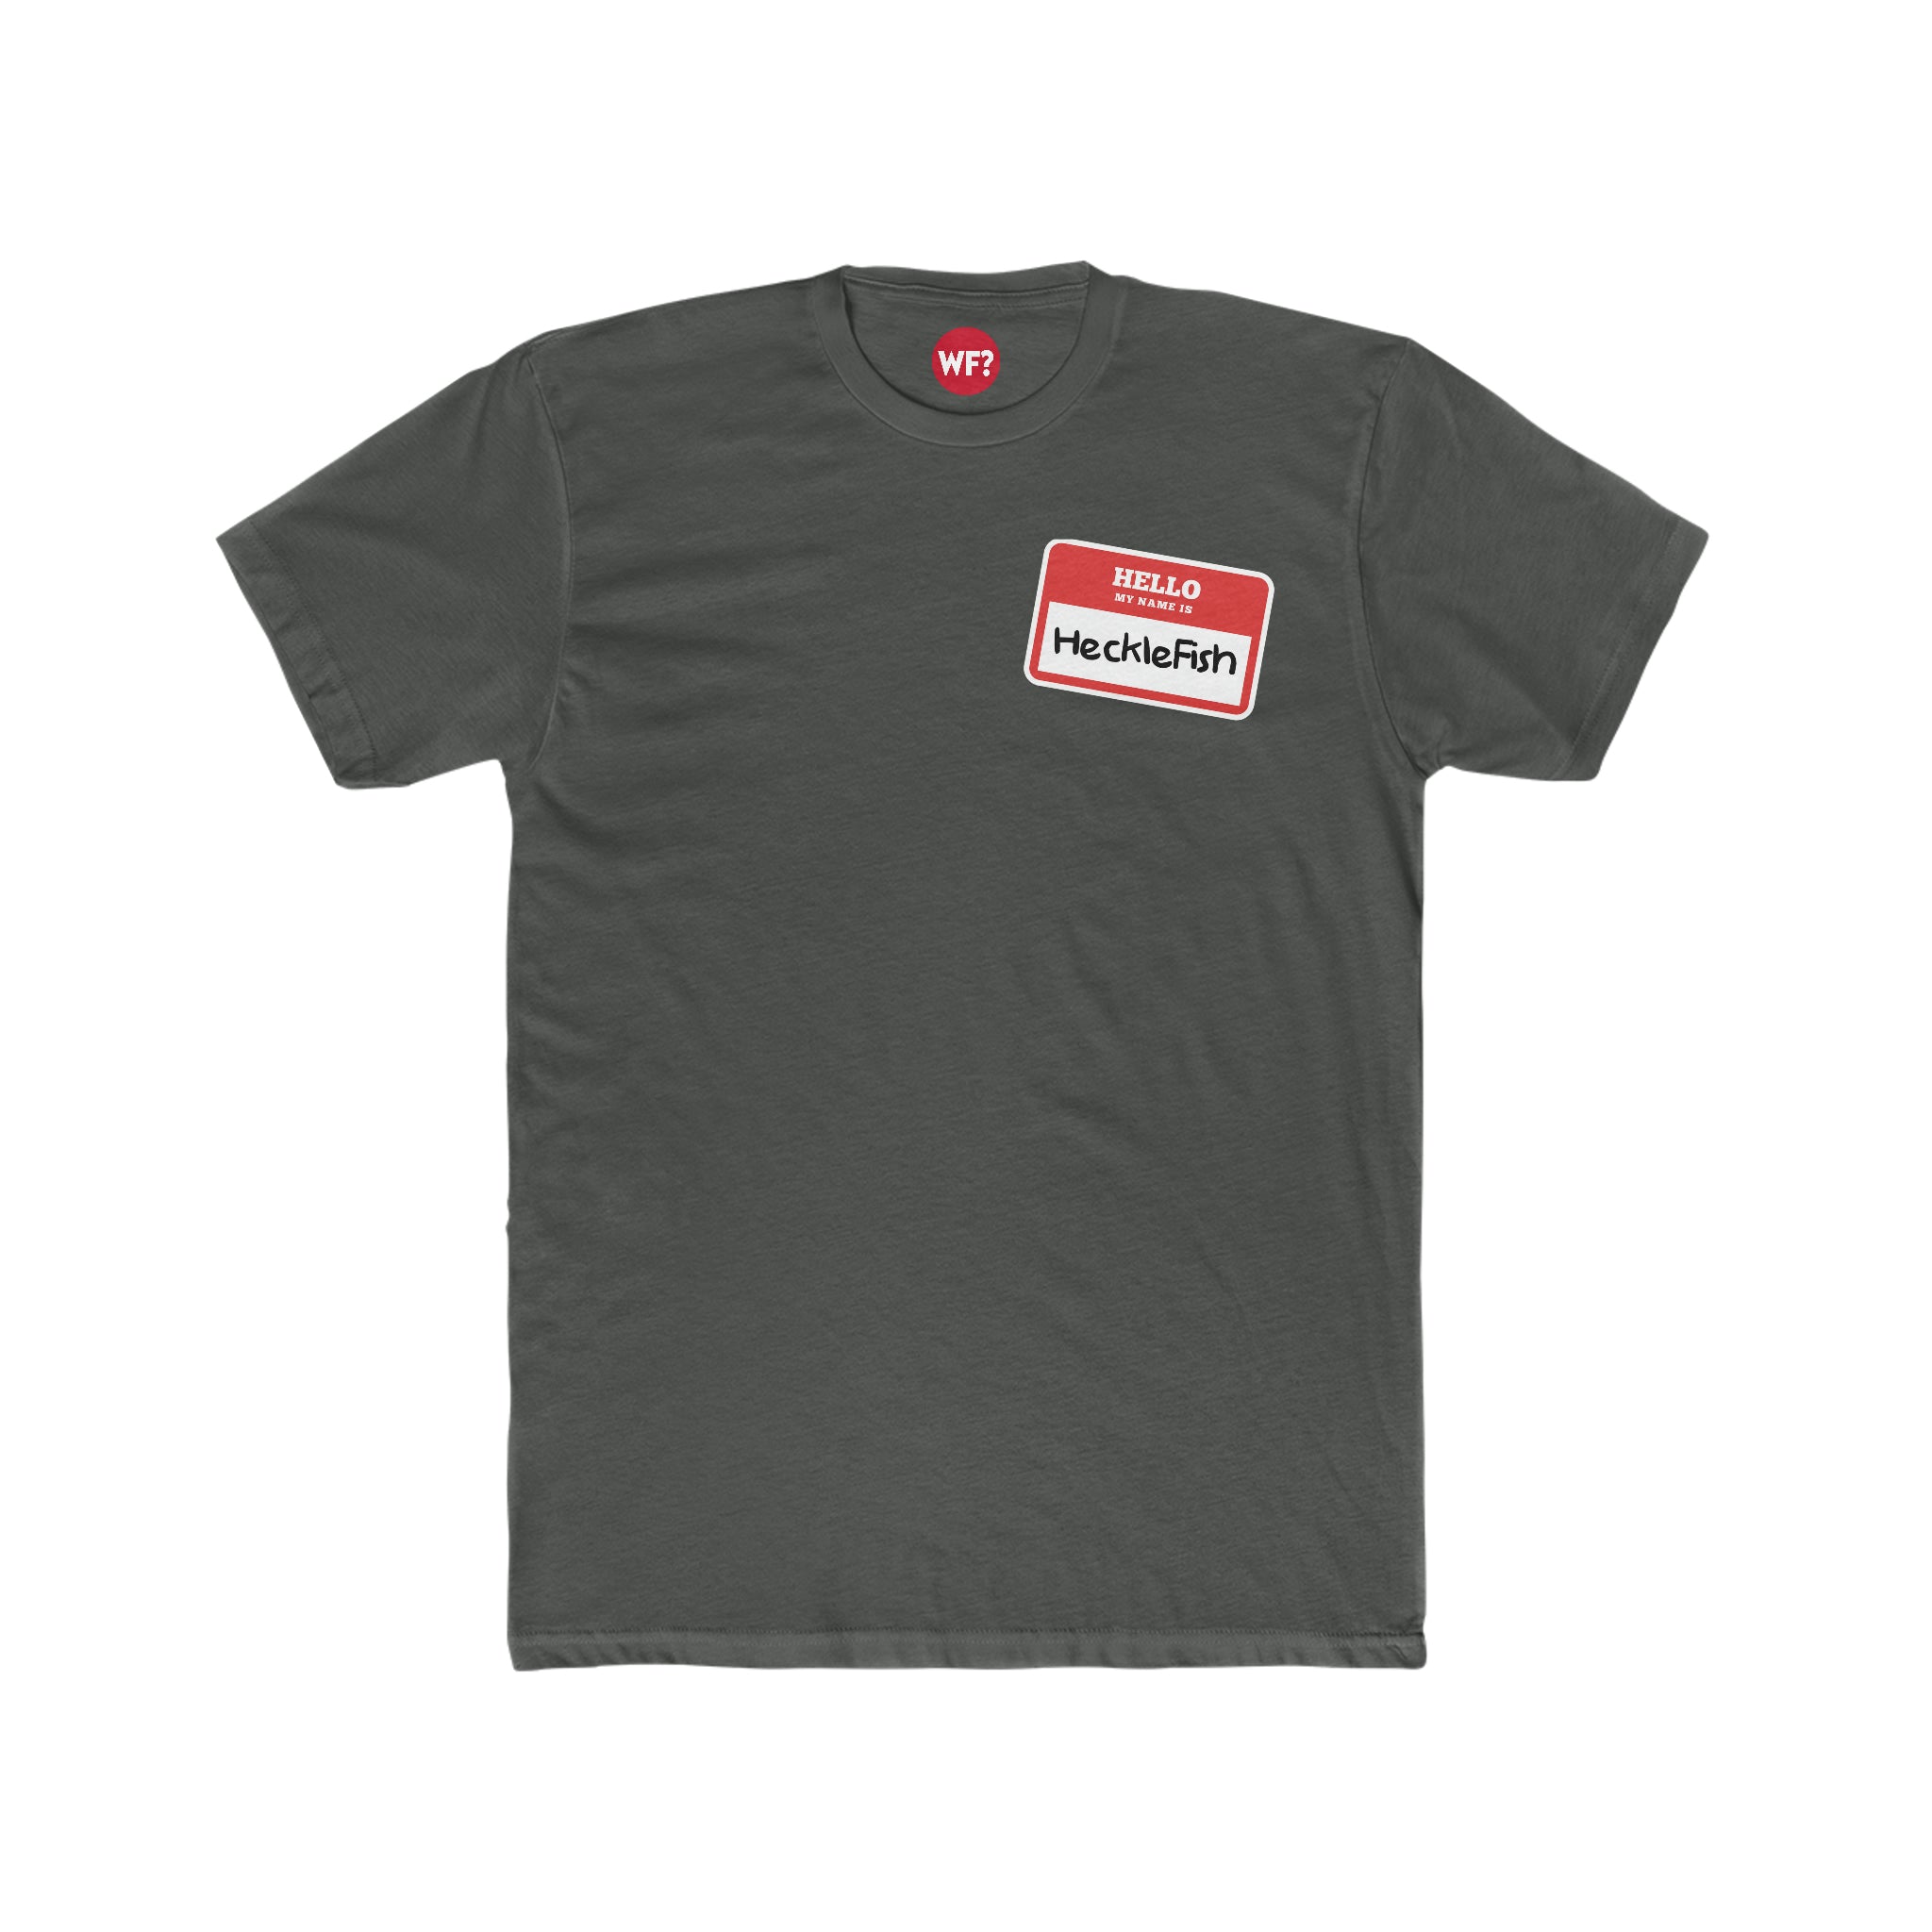 Buy solid-heavy-metal Hecklefish Nametag Unisex T-Shirt